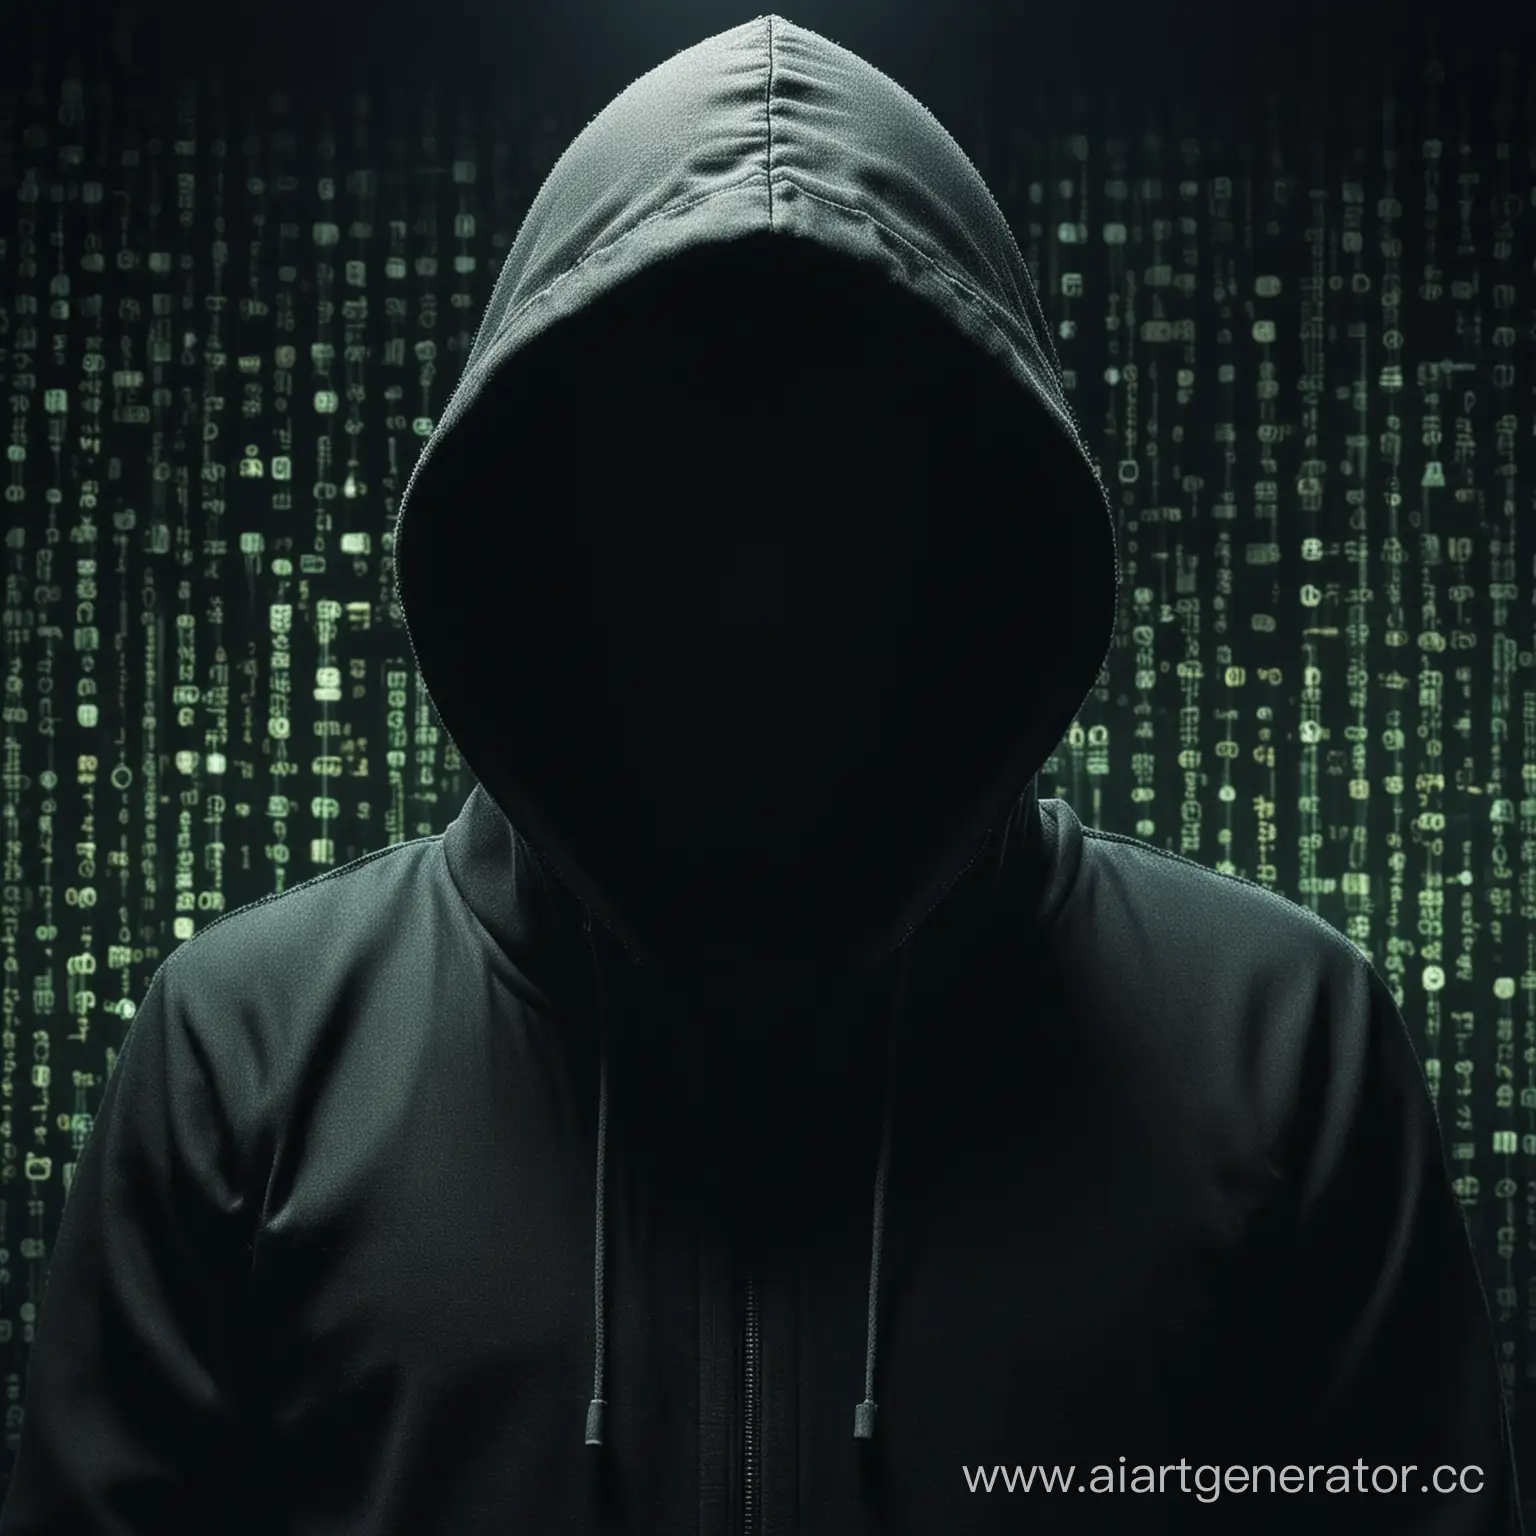 Хакер в капюшоне без лица, темная комната, сзади матрица